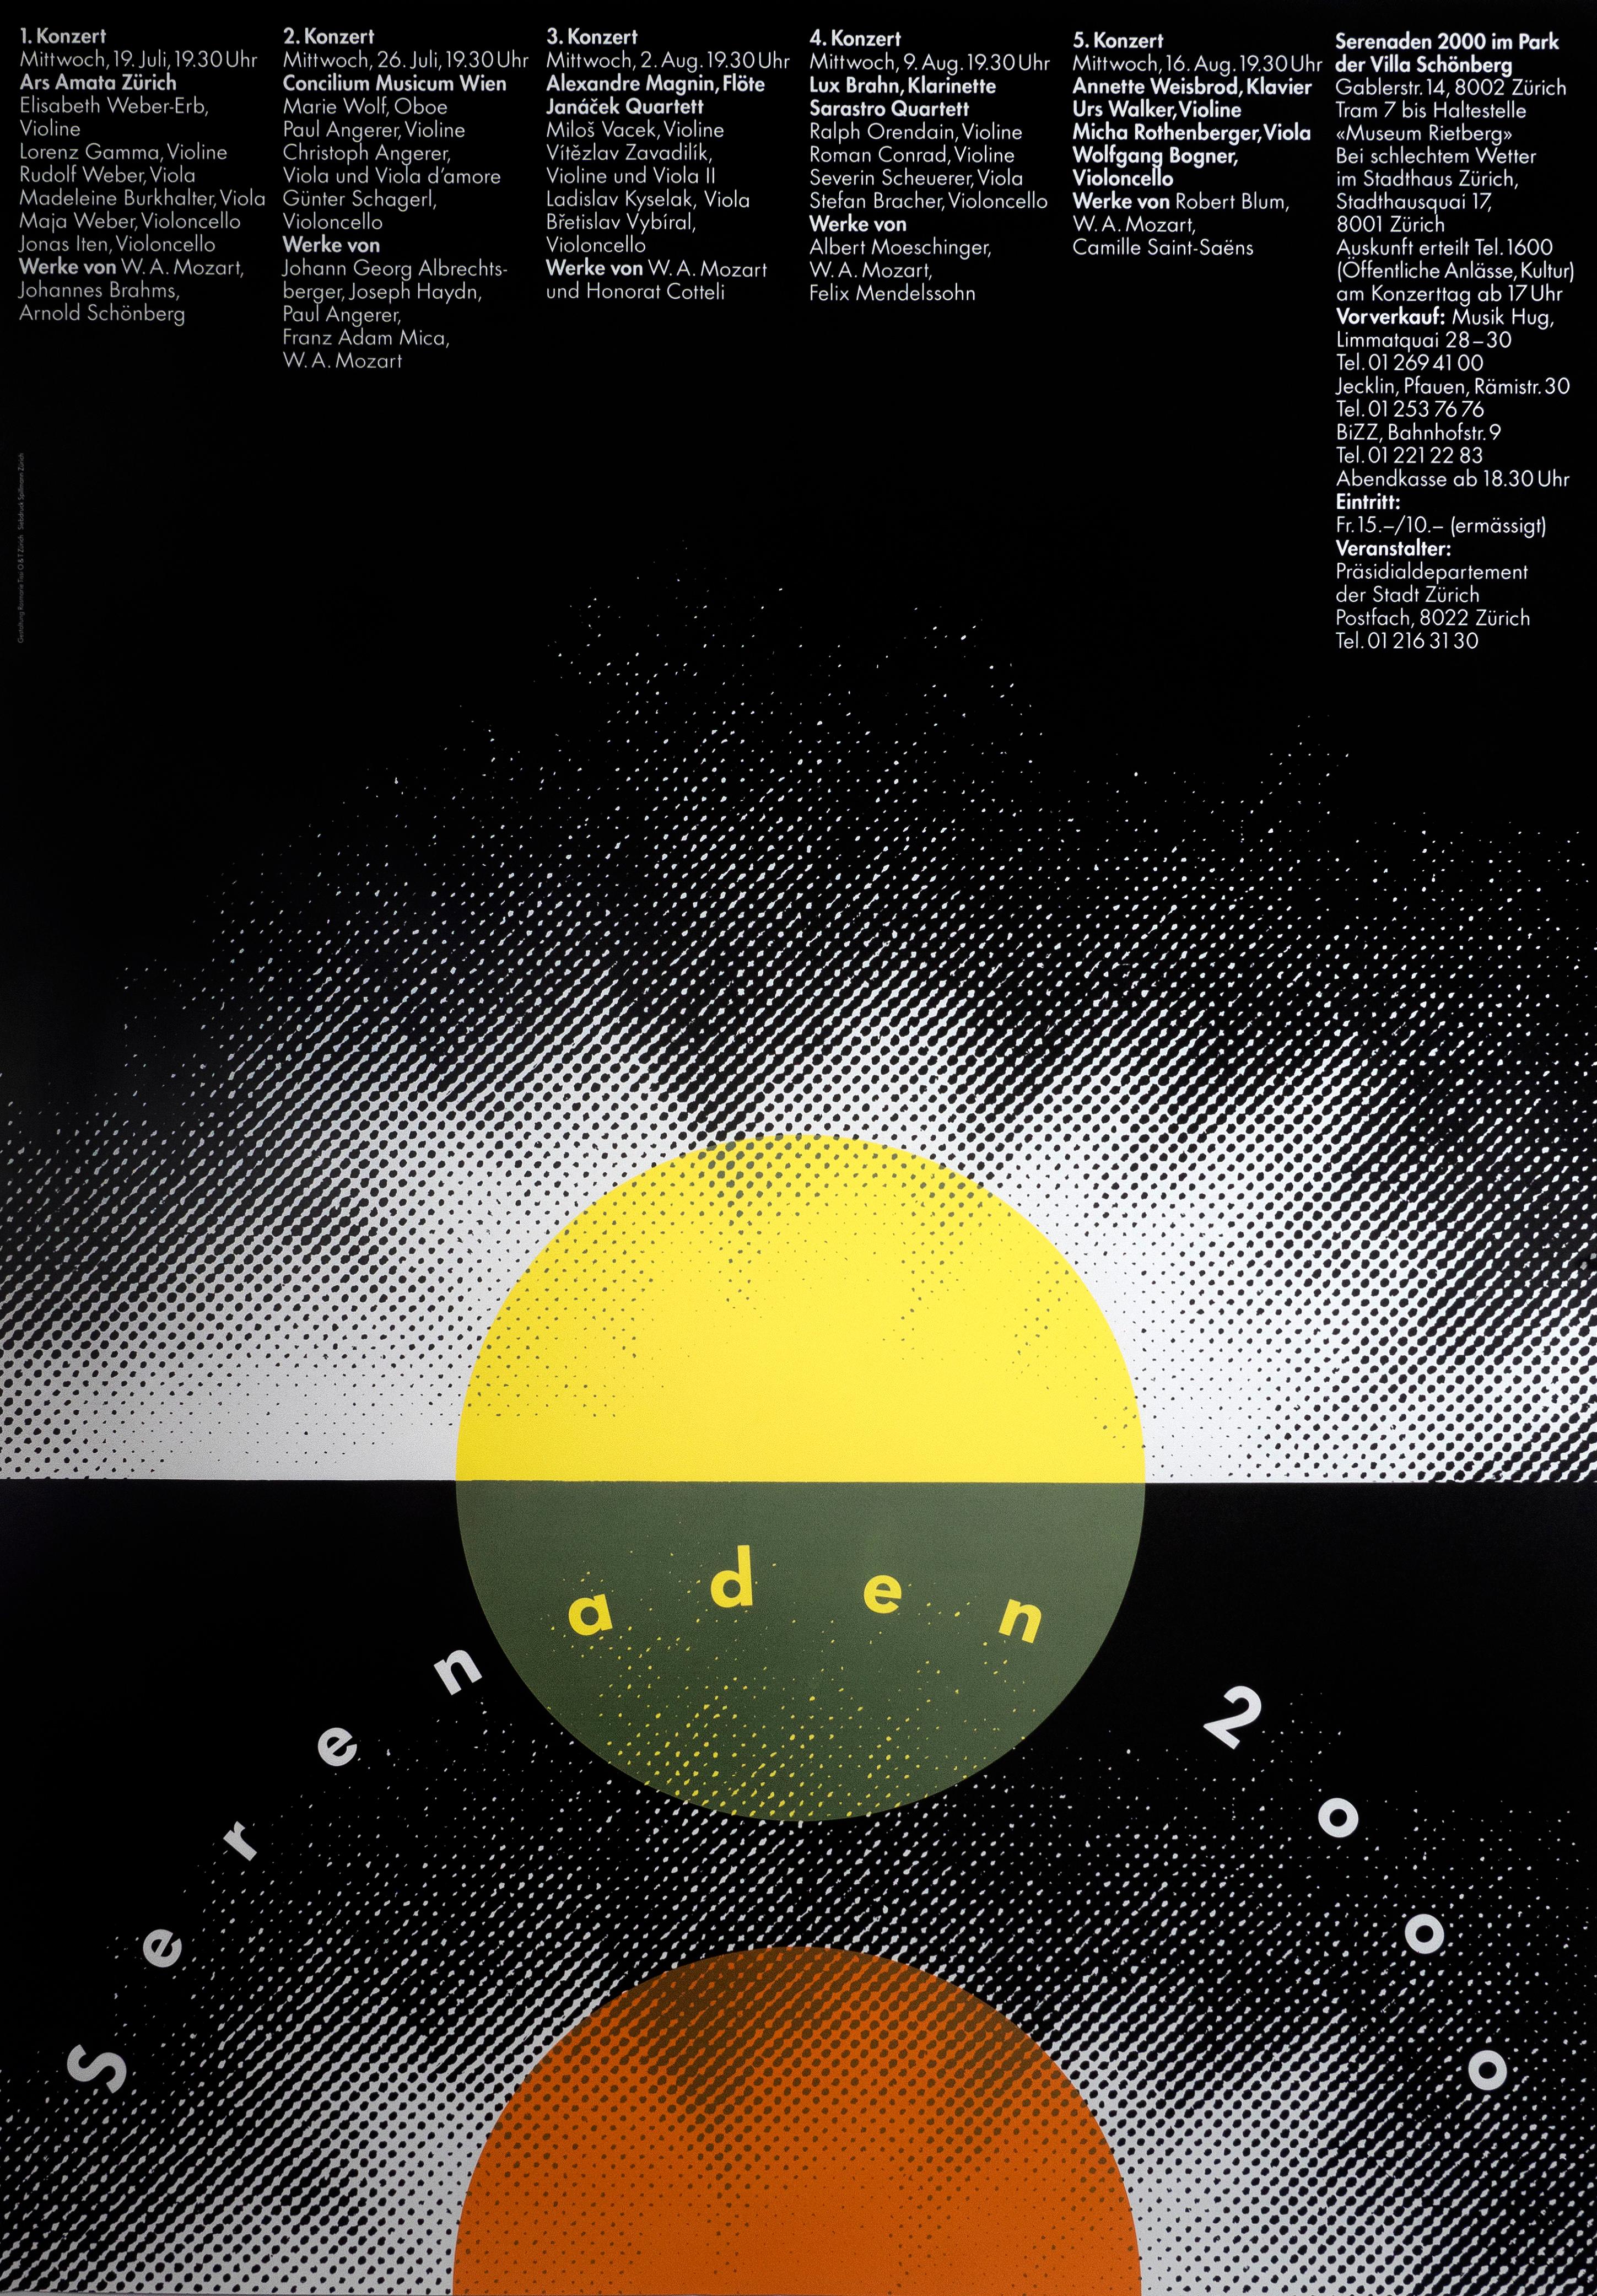 "Serenaden 2000" Swiss Post Modern Music Festival Original Vintage Poster - Print by Rosmarie Tissi